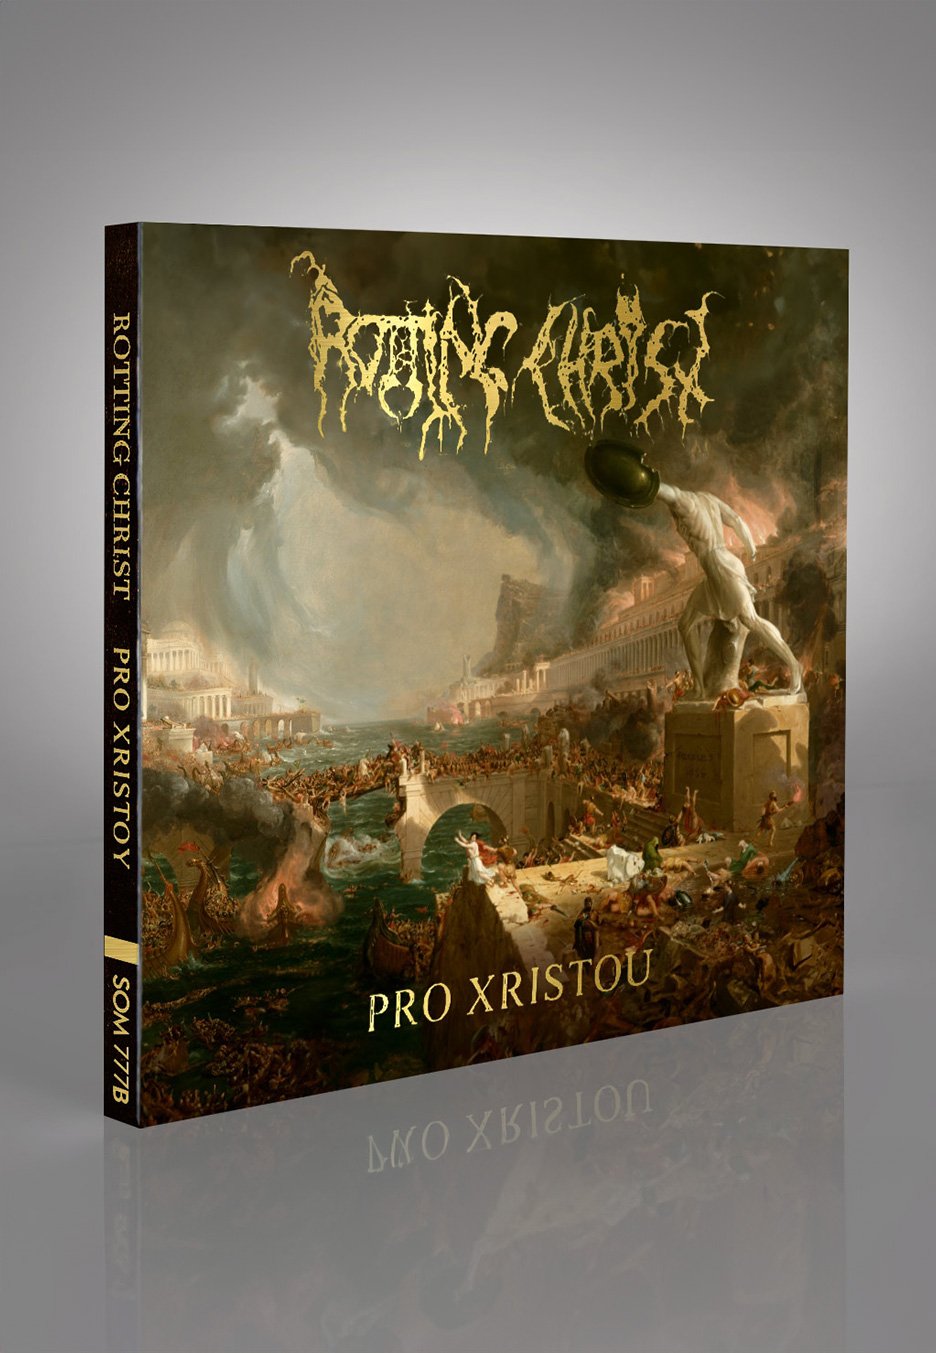 Rotting Christ - Pro Xristou - Digipak CD